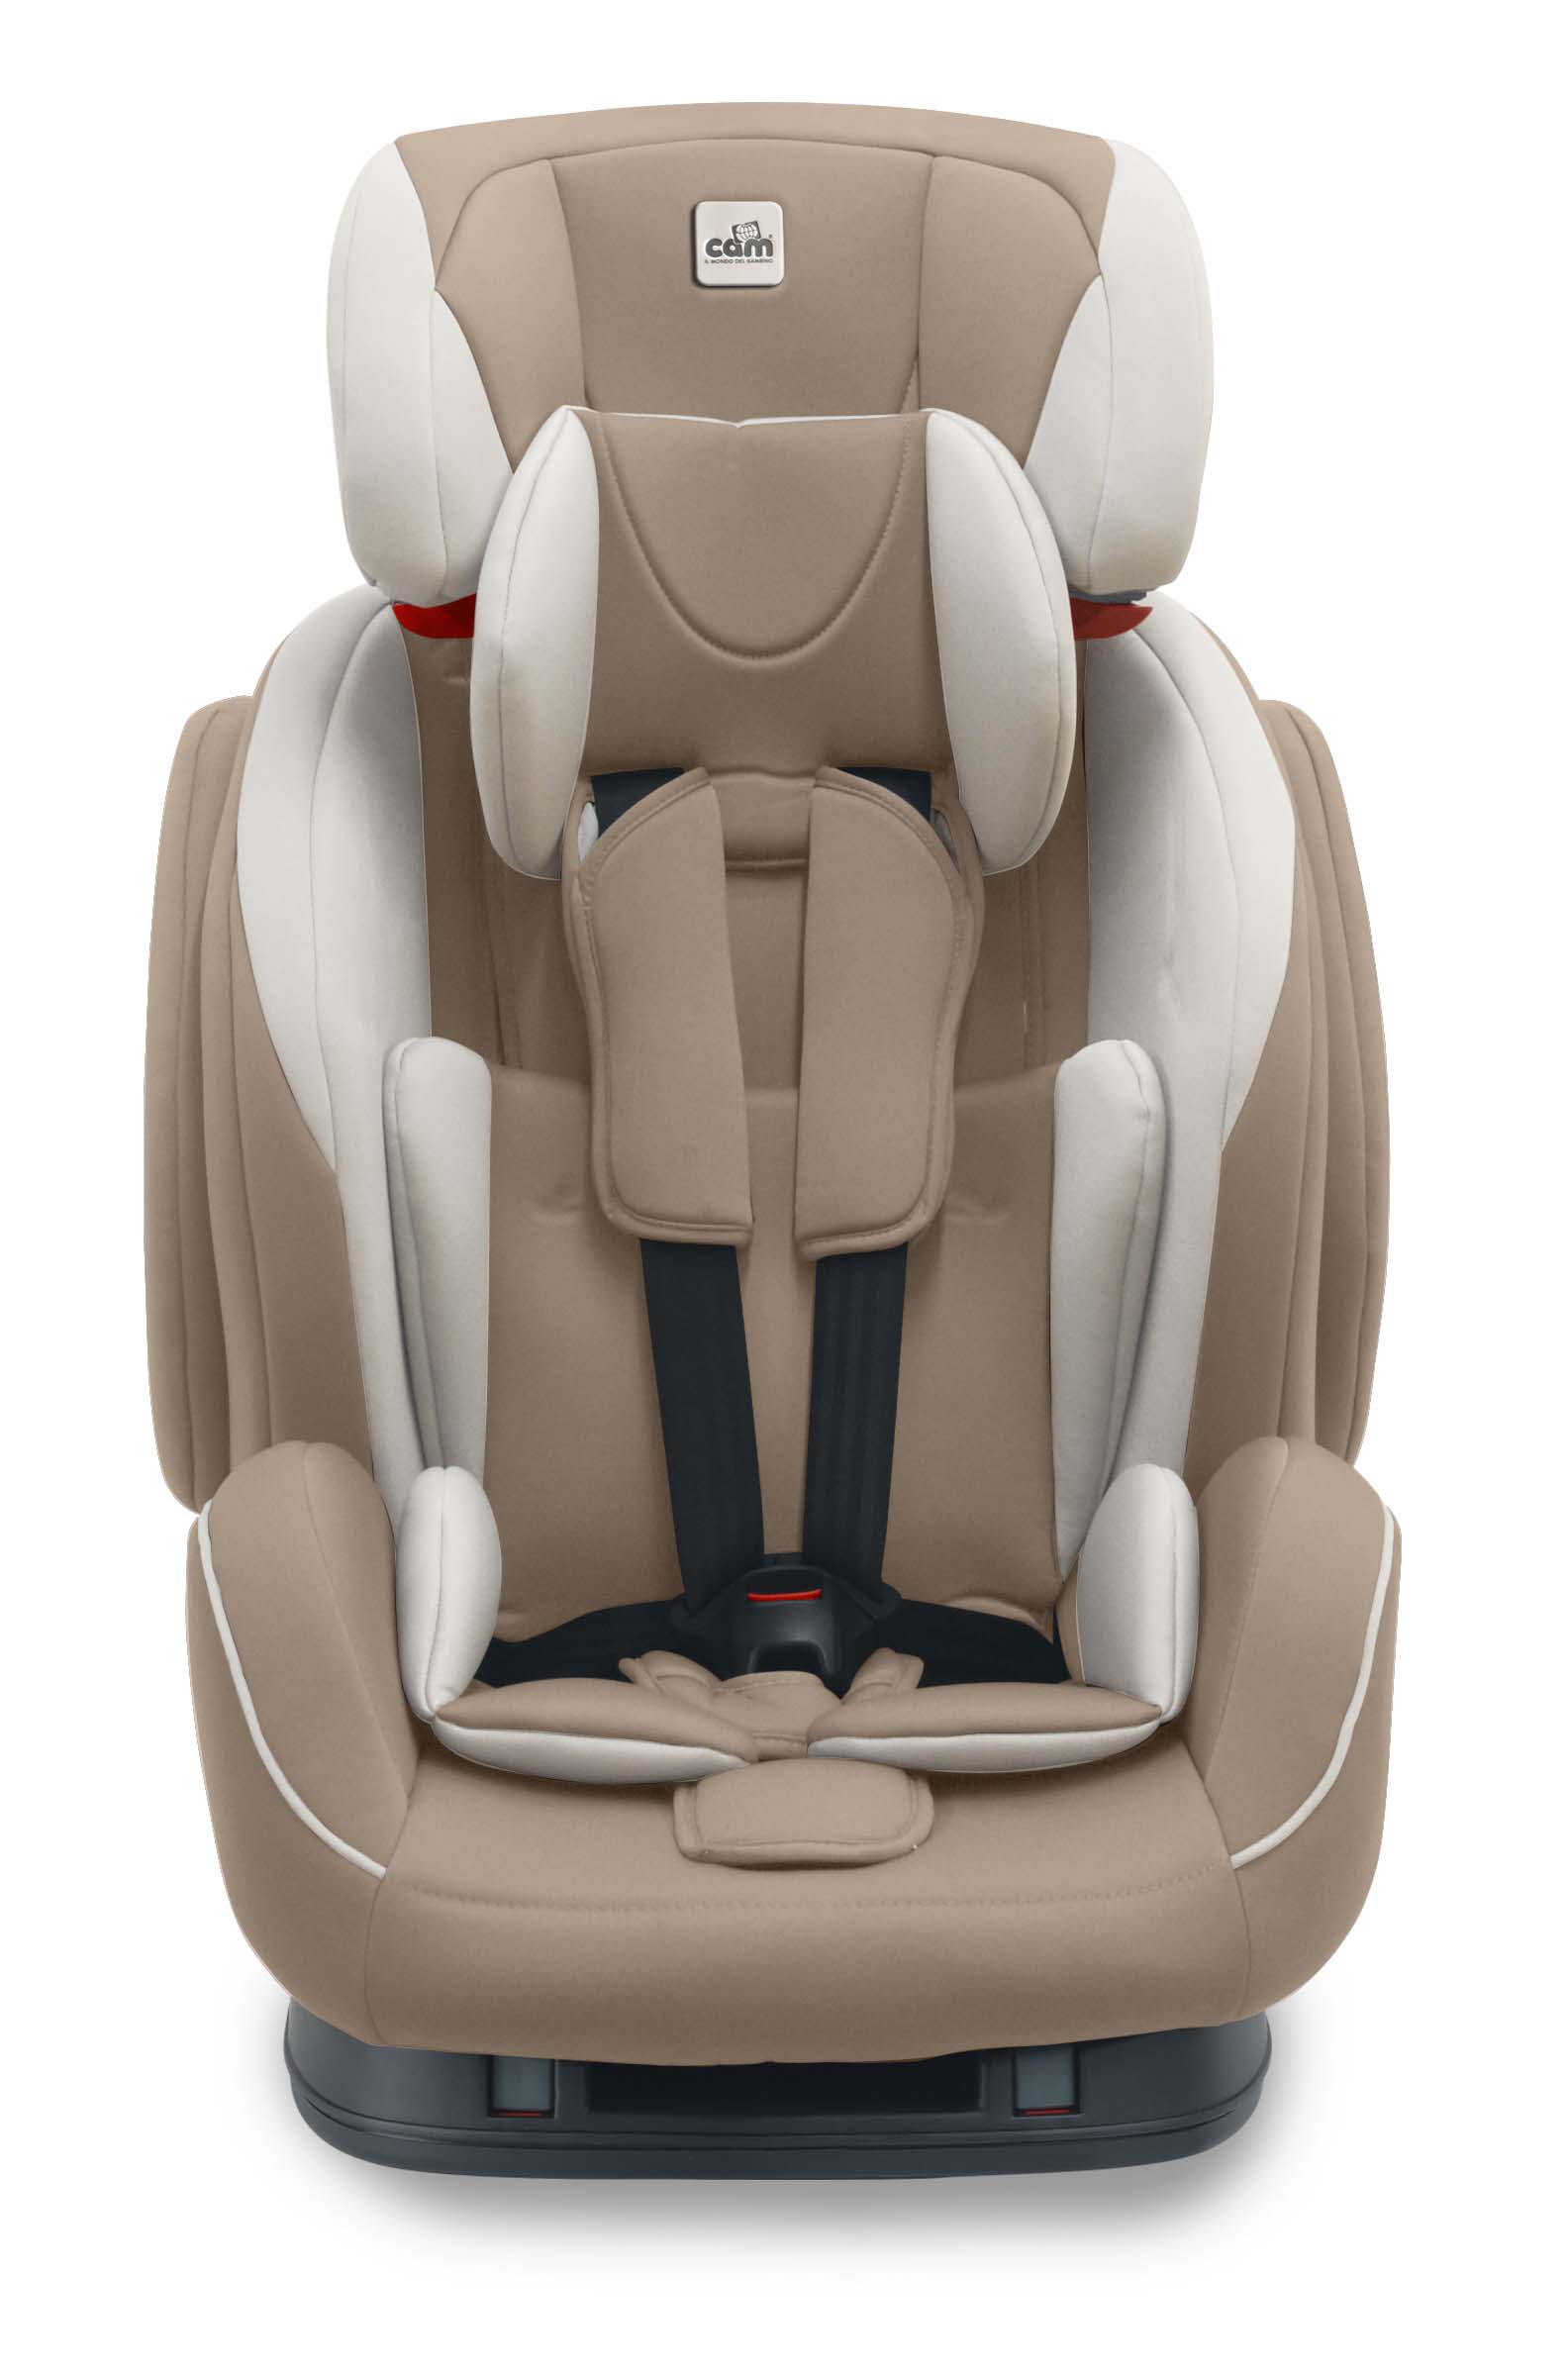 Cam Siège auto siège-auto enfants siège-auto Regolo ISOFIX 9-36 kg 